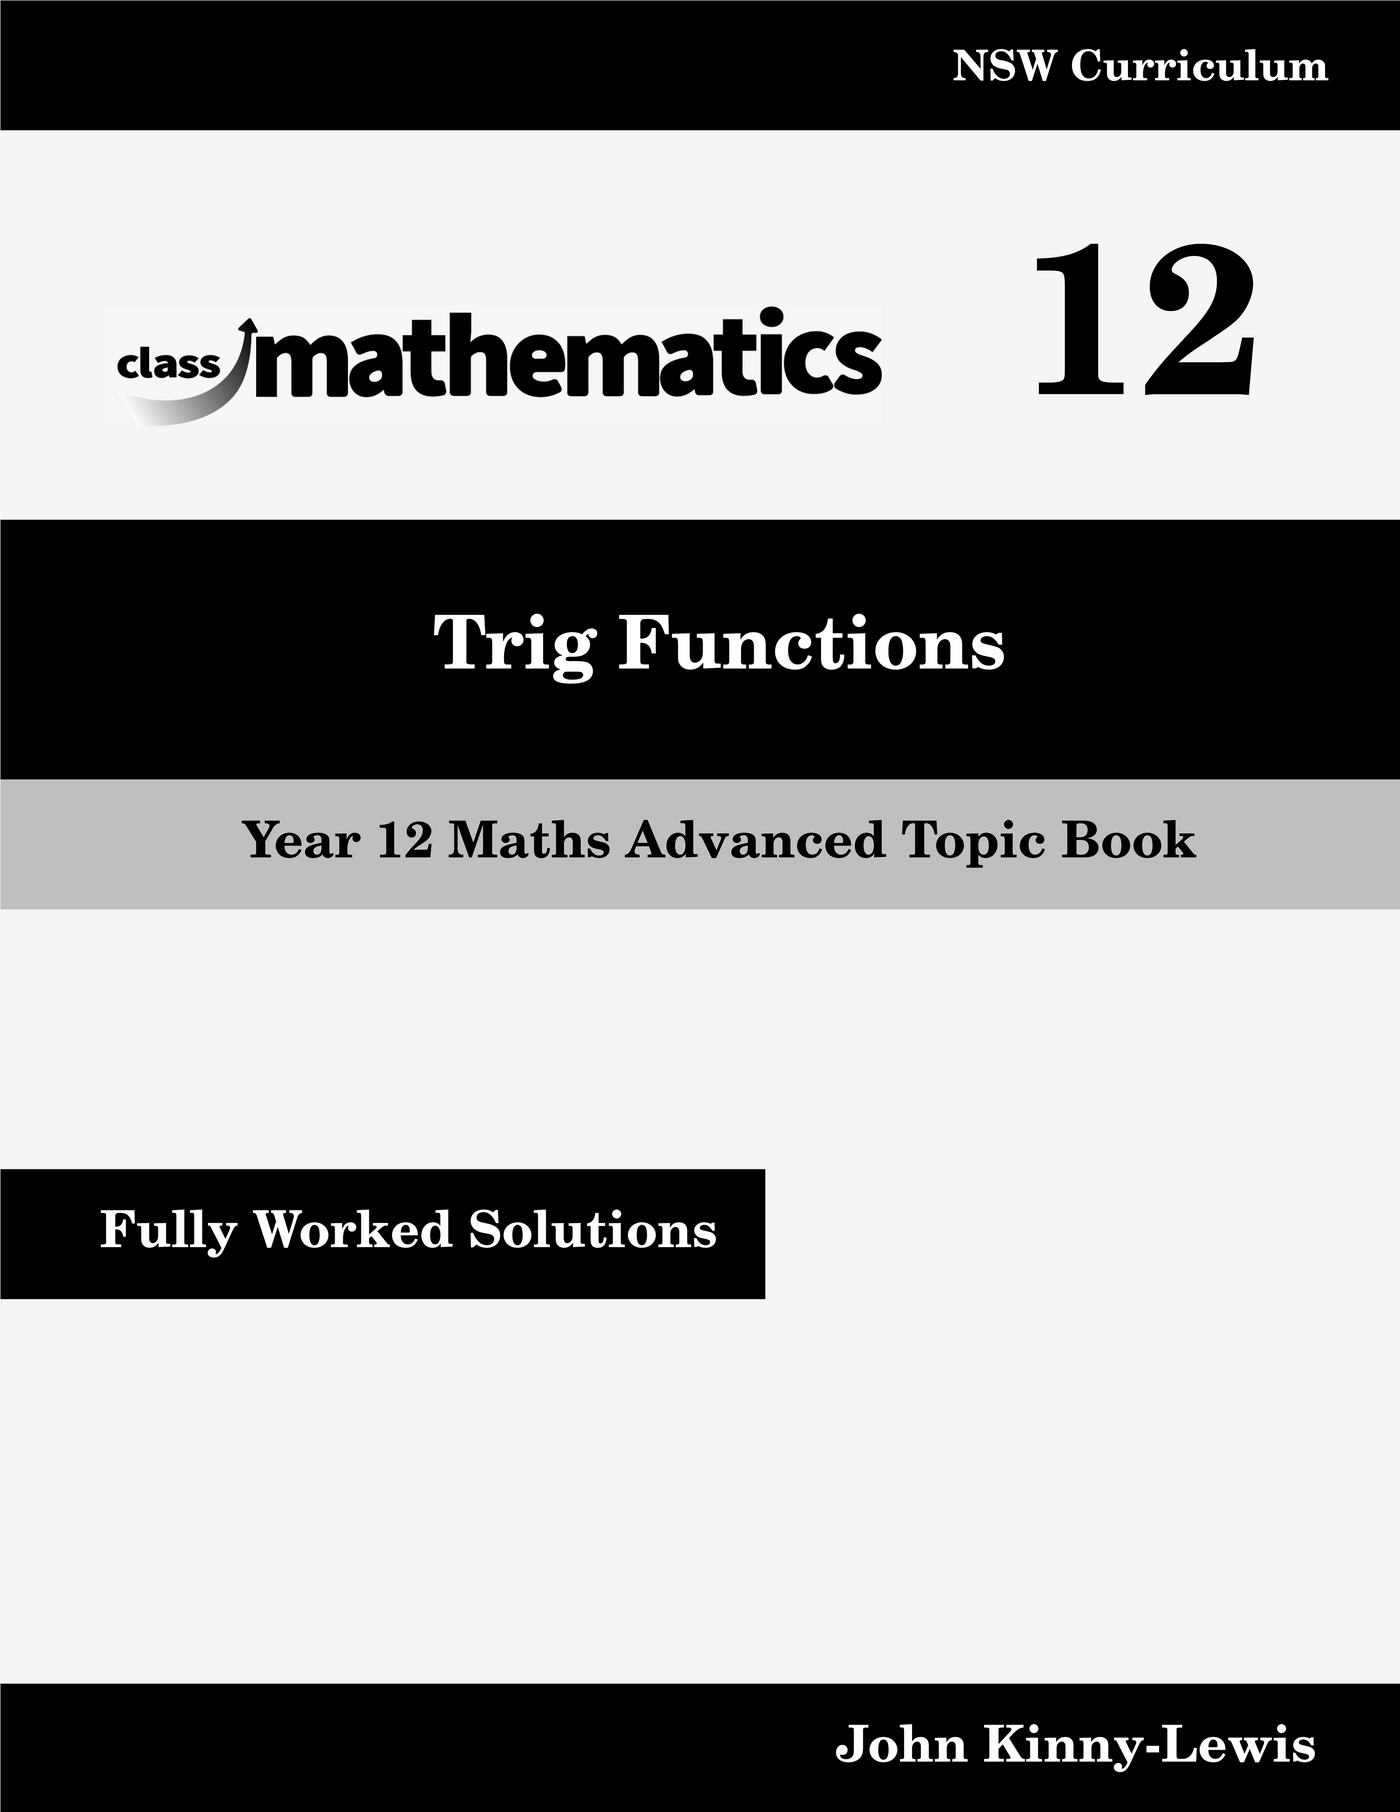 NSW Year 12 Maths Advanced - Trig Functions